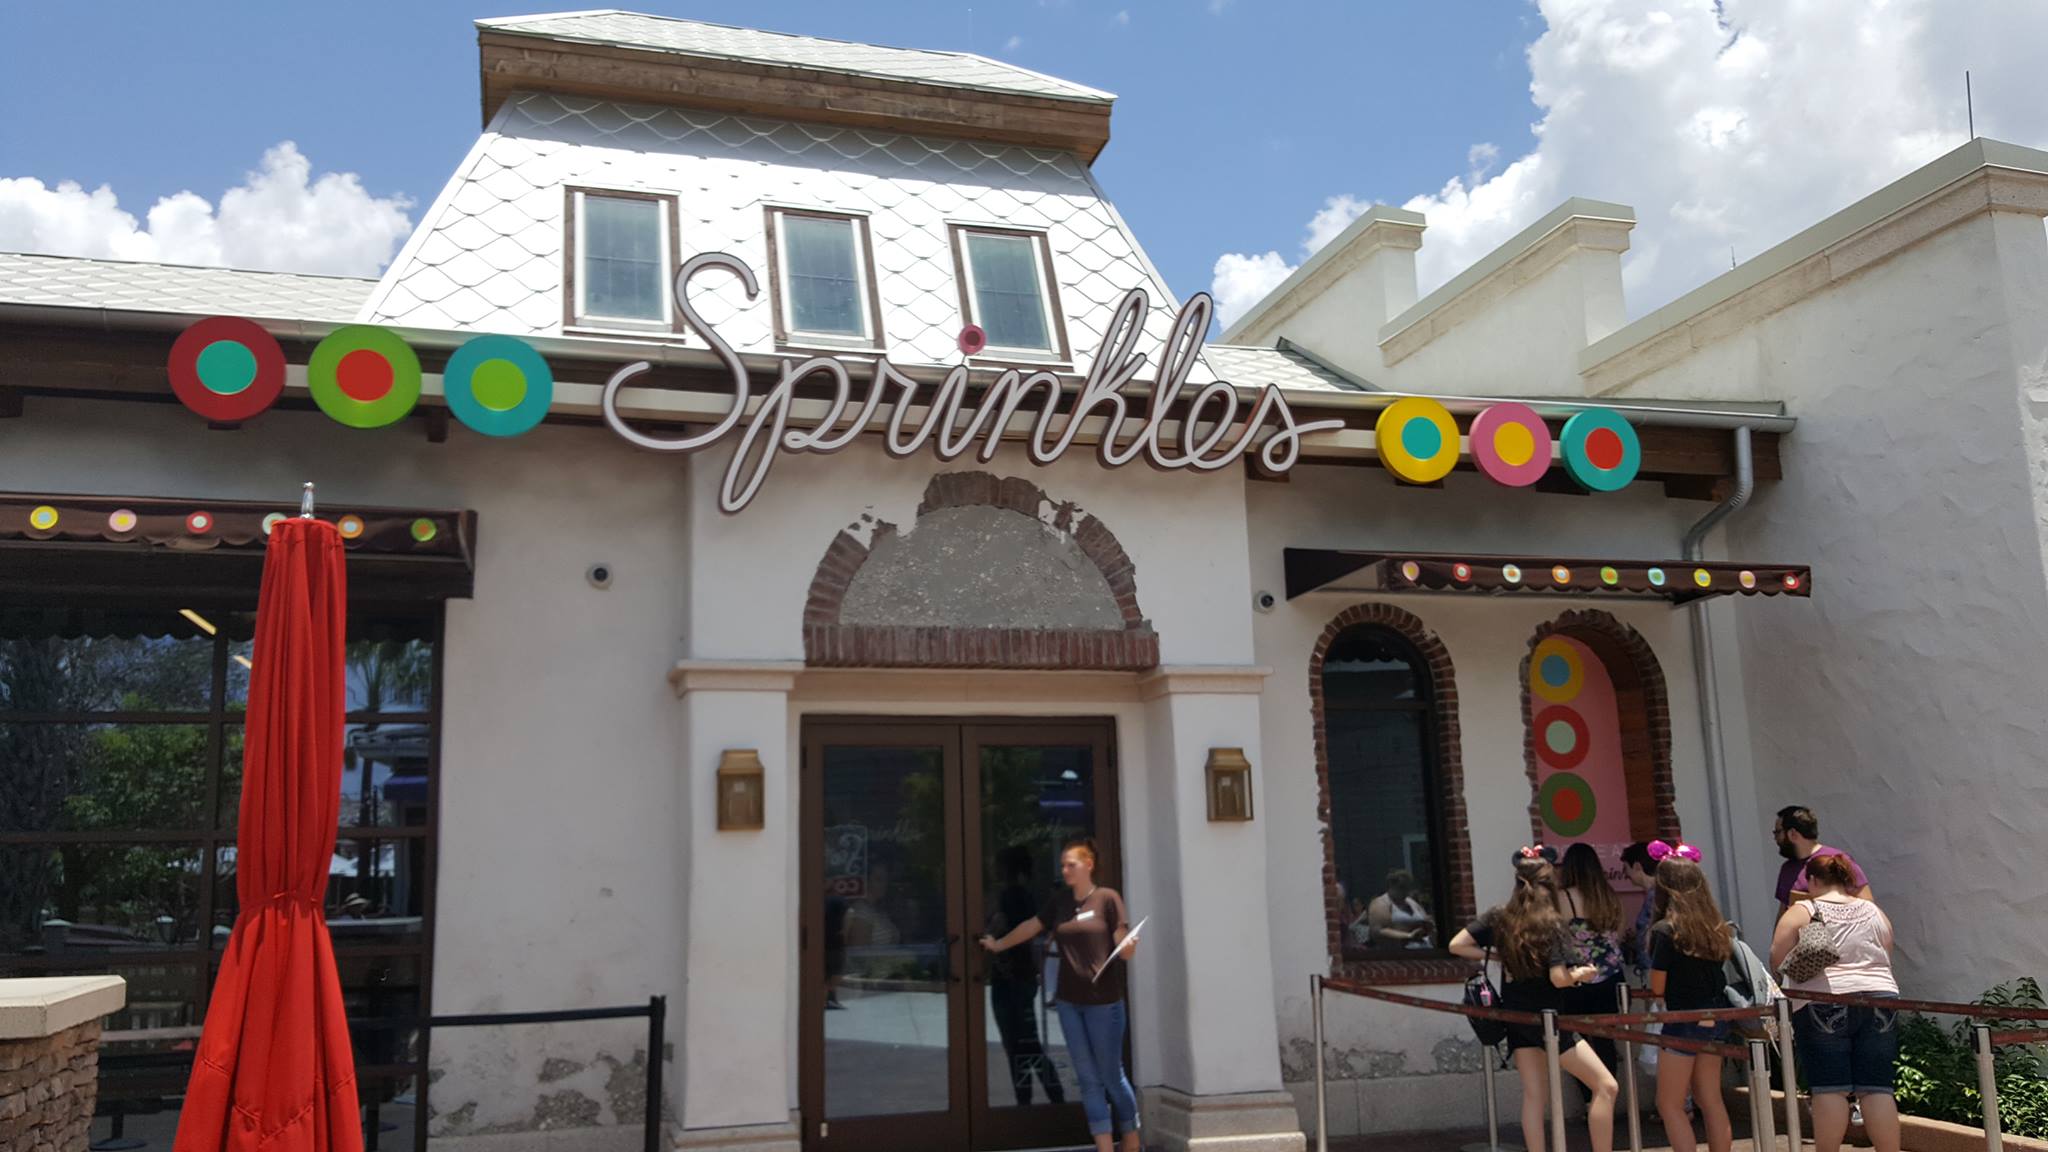 Is a Sprinkles coming to Disneyland Downtown Disney?